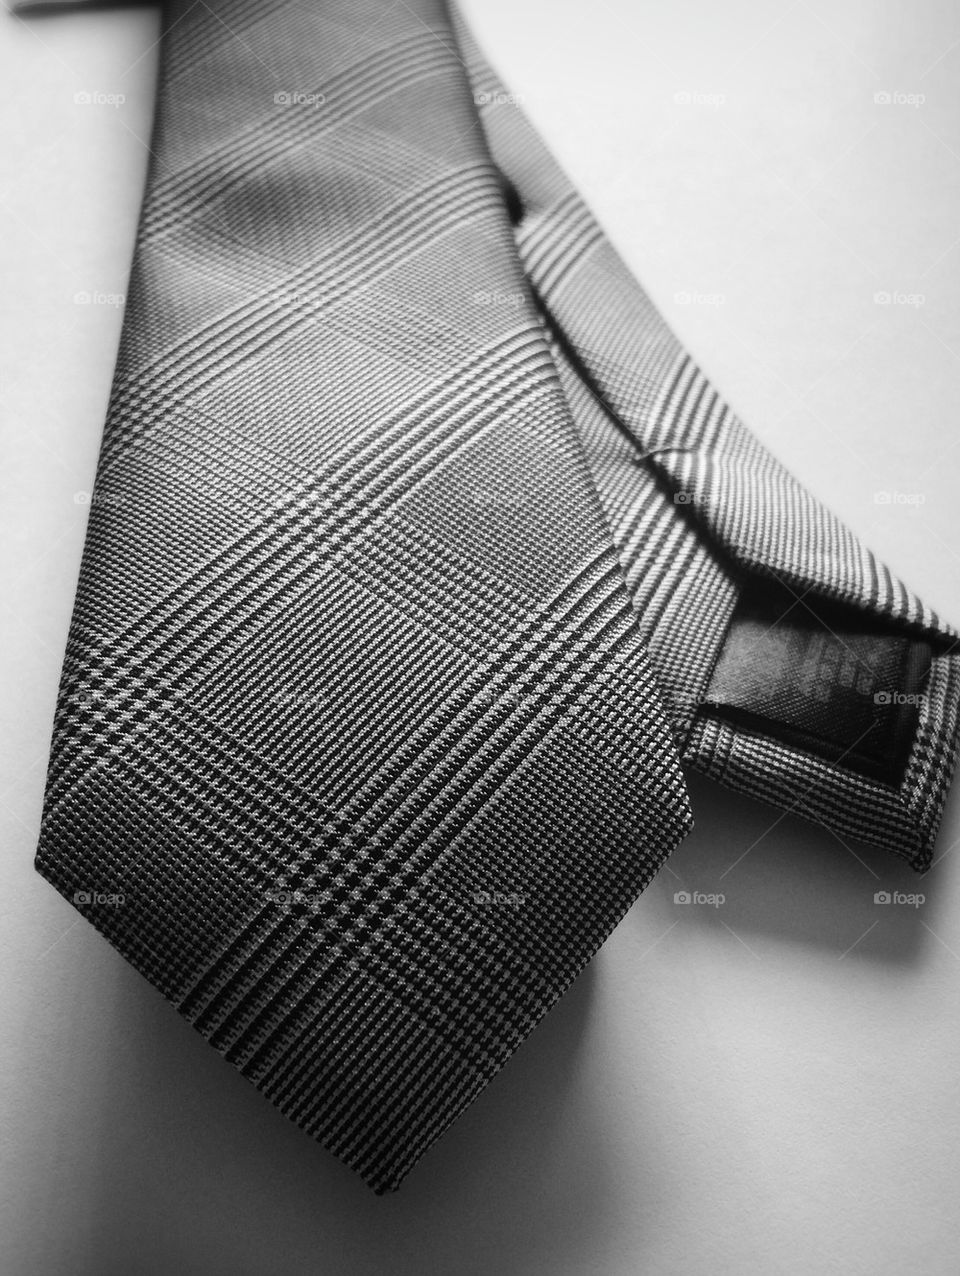 Close up of tie